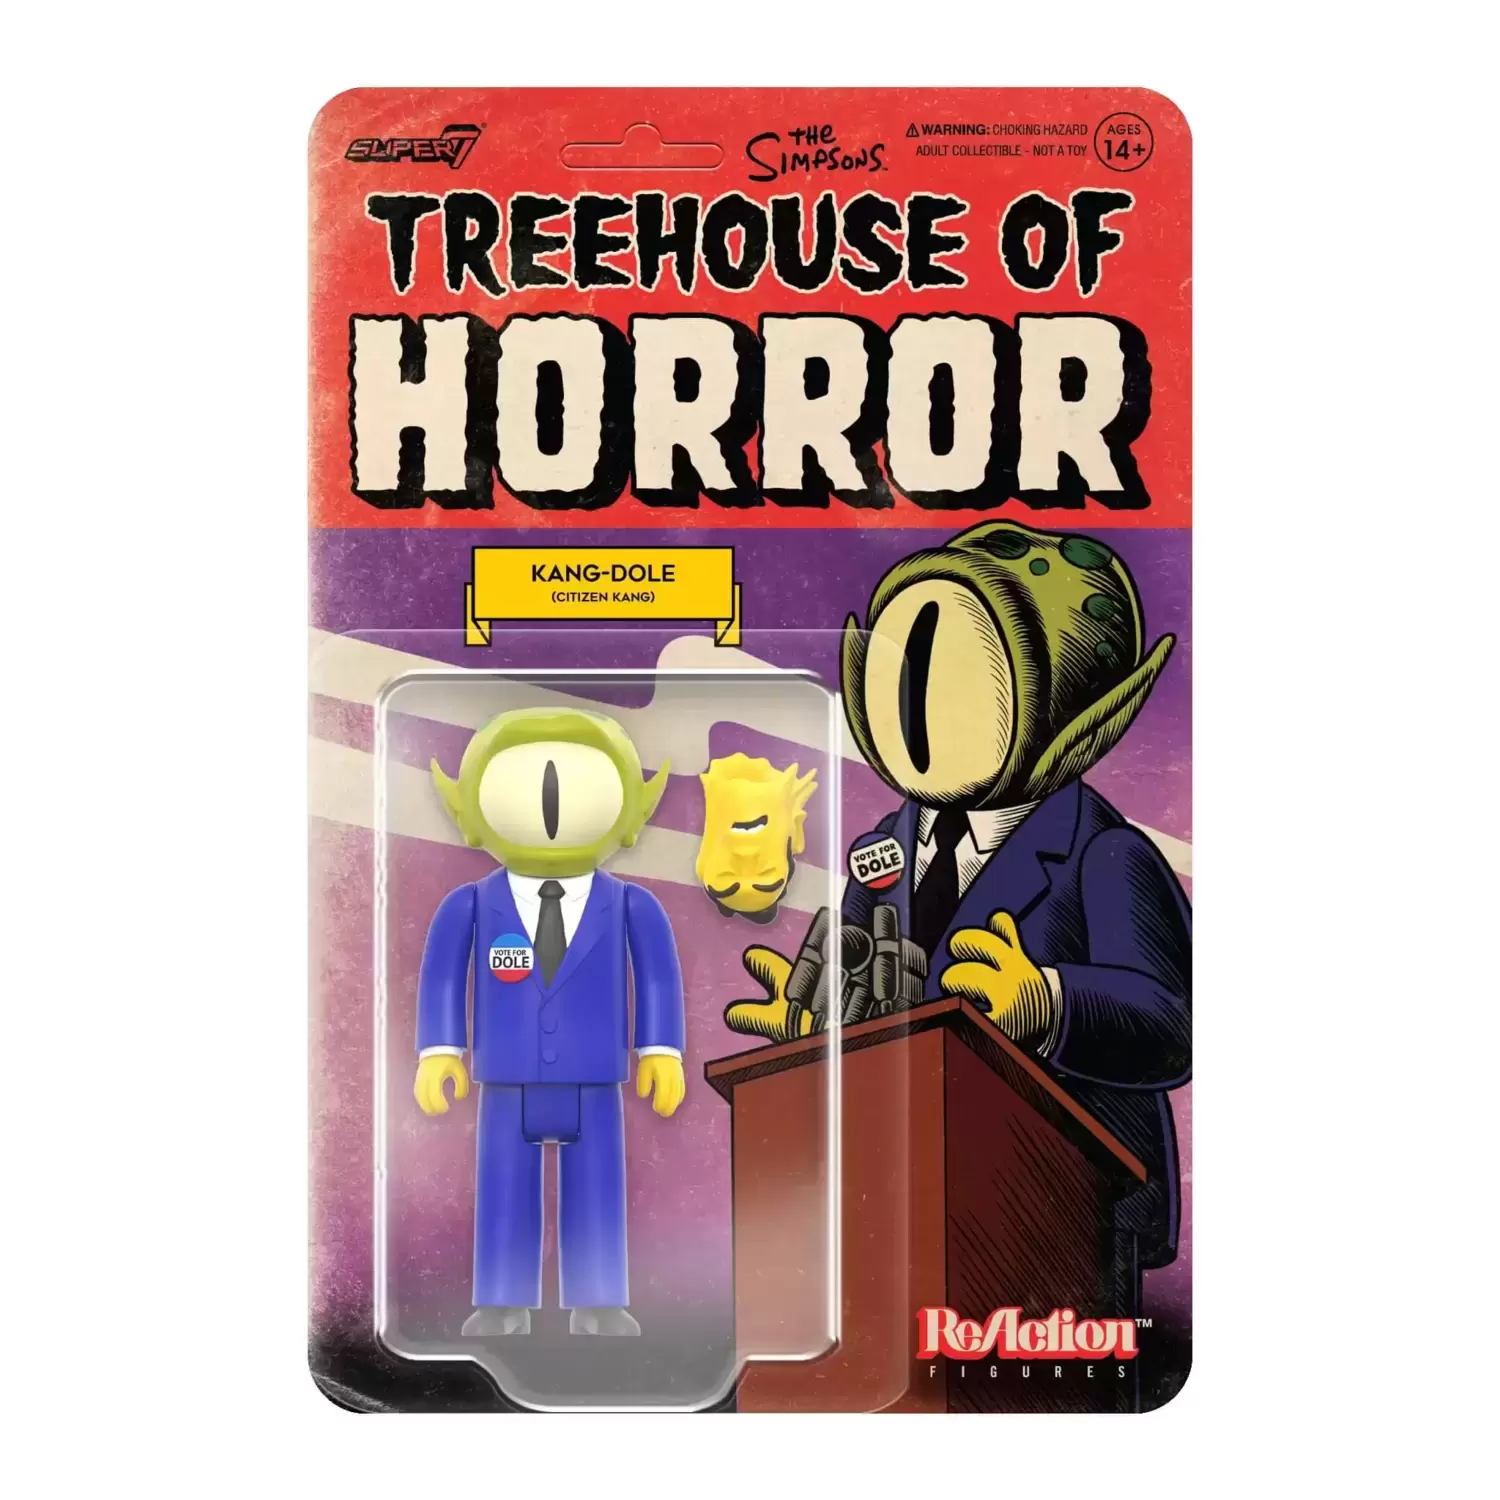 ReAction Figures - The Simpsons (Treehouse of Horror) - Alien President